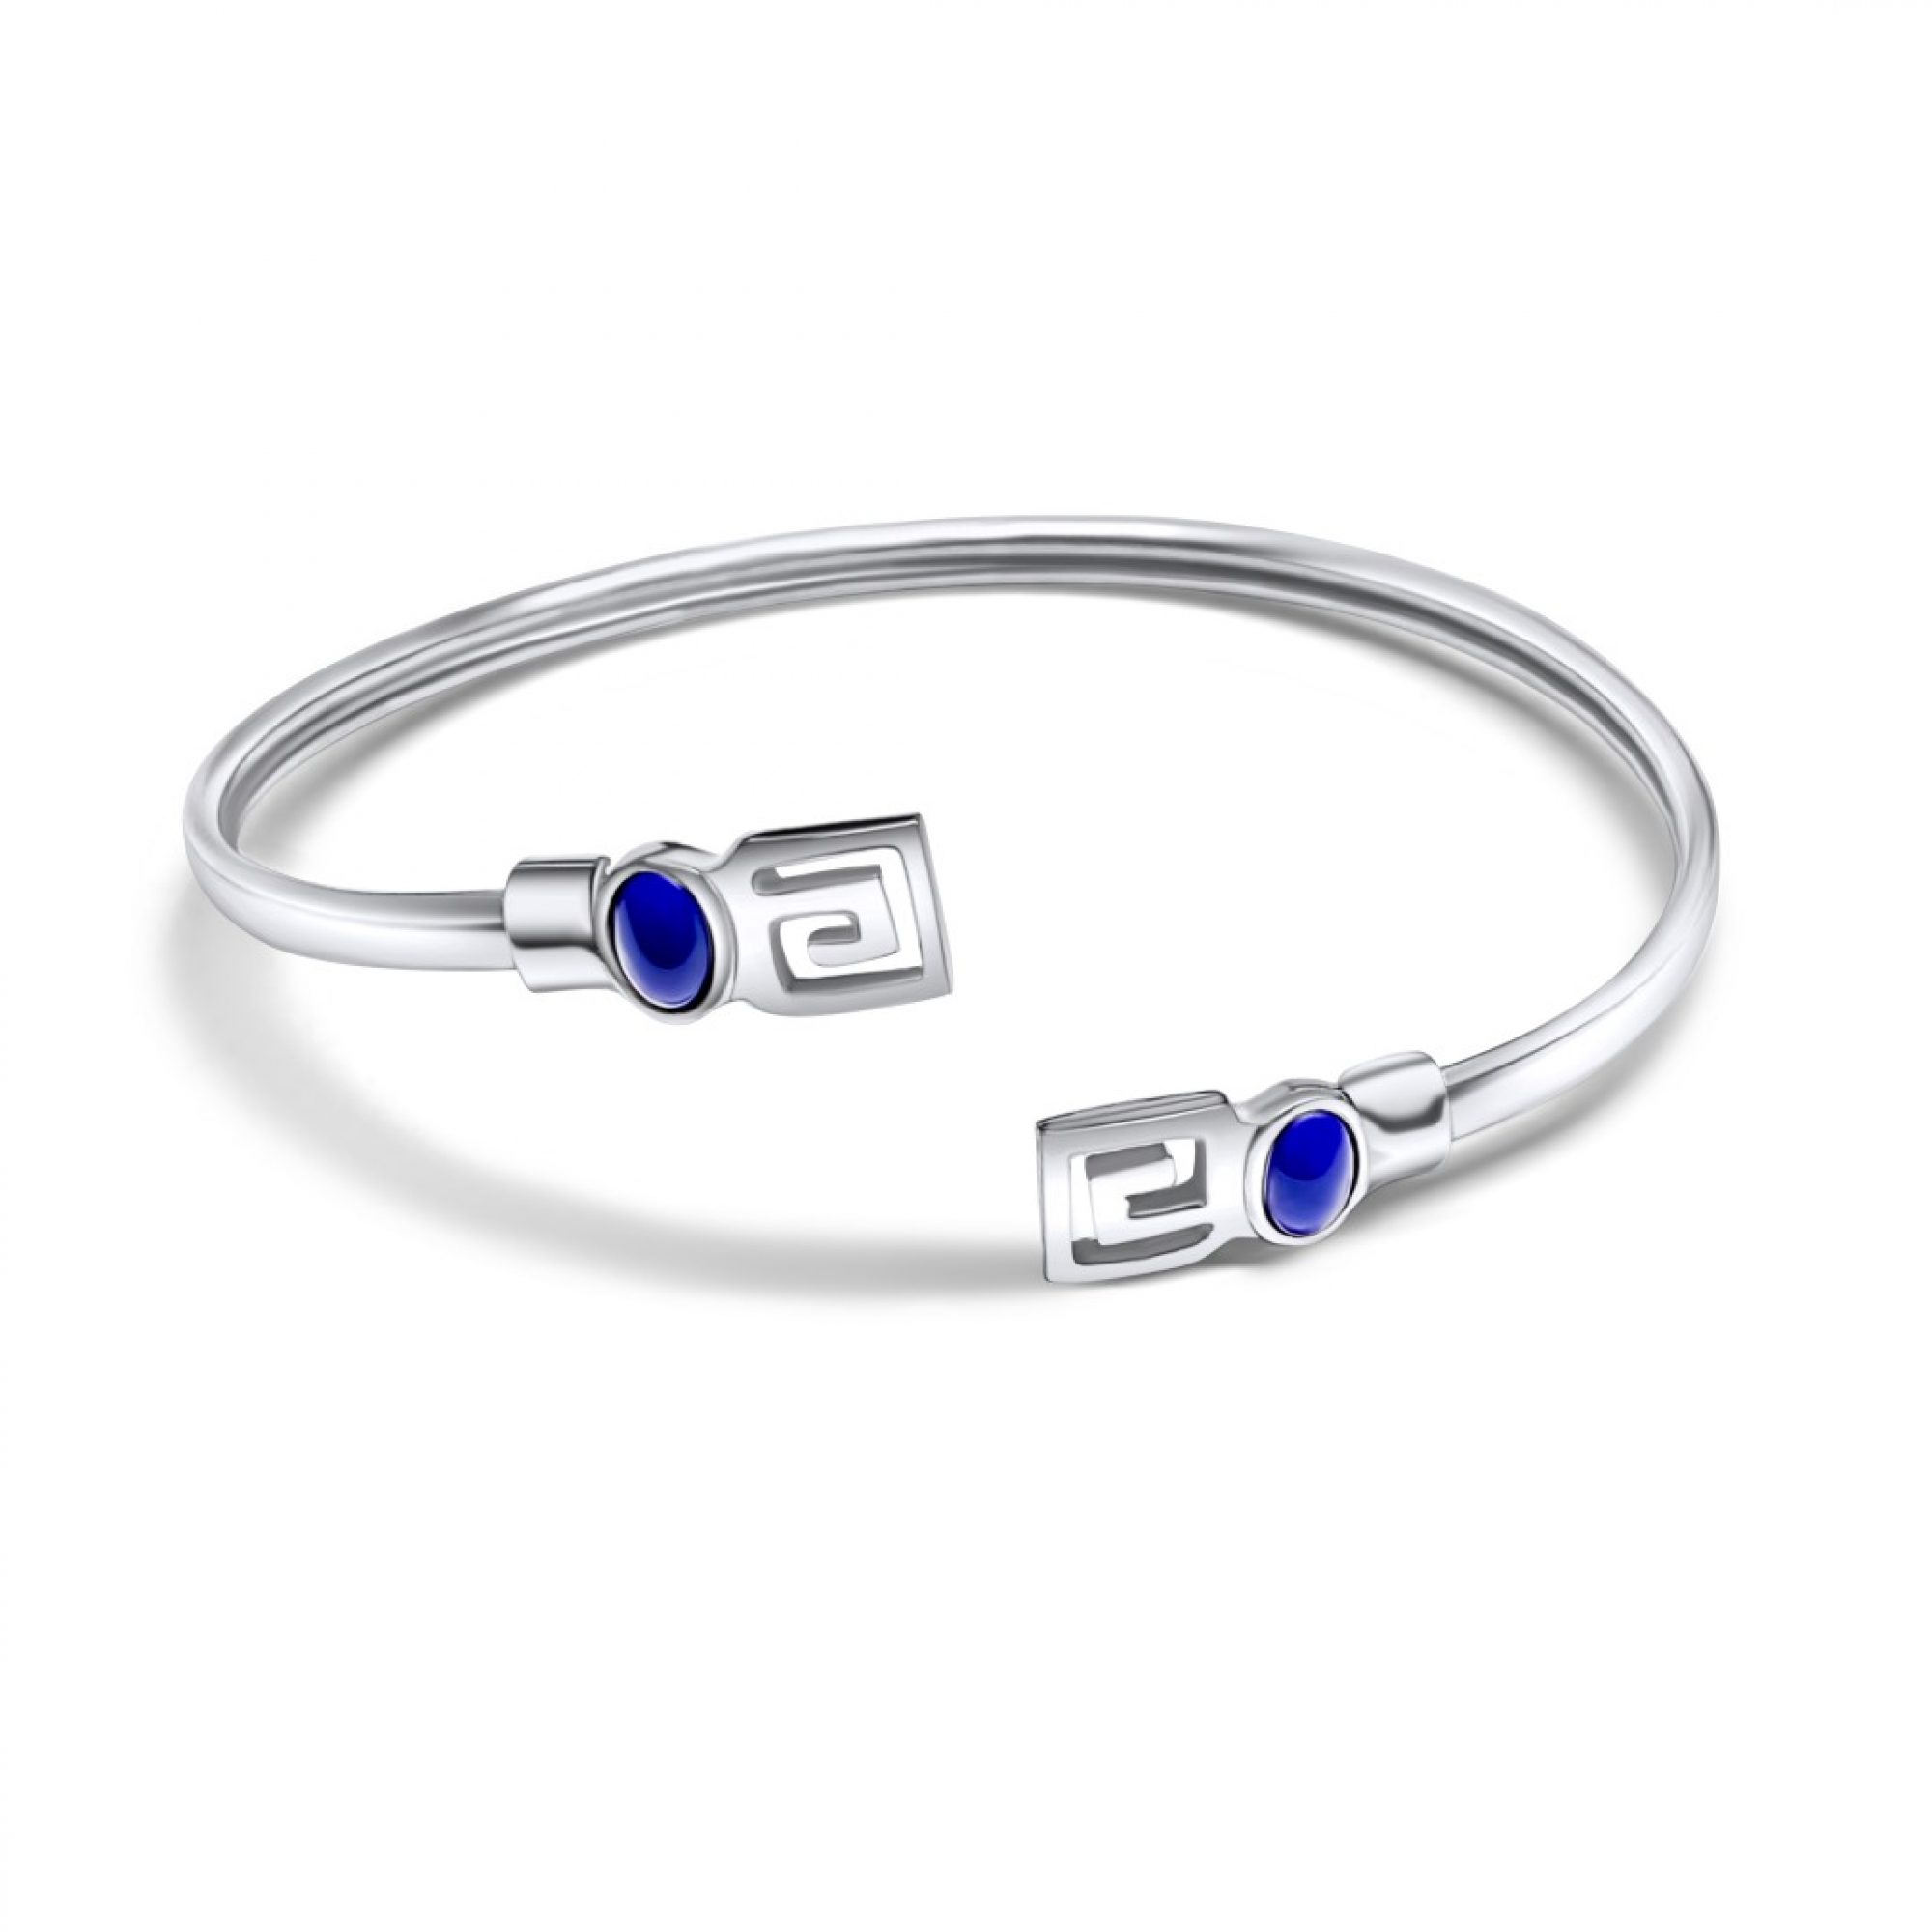 Adjustable meander bracelet with lapis lazuli stones